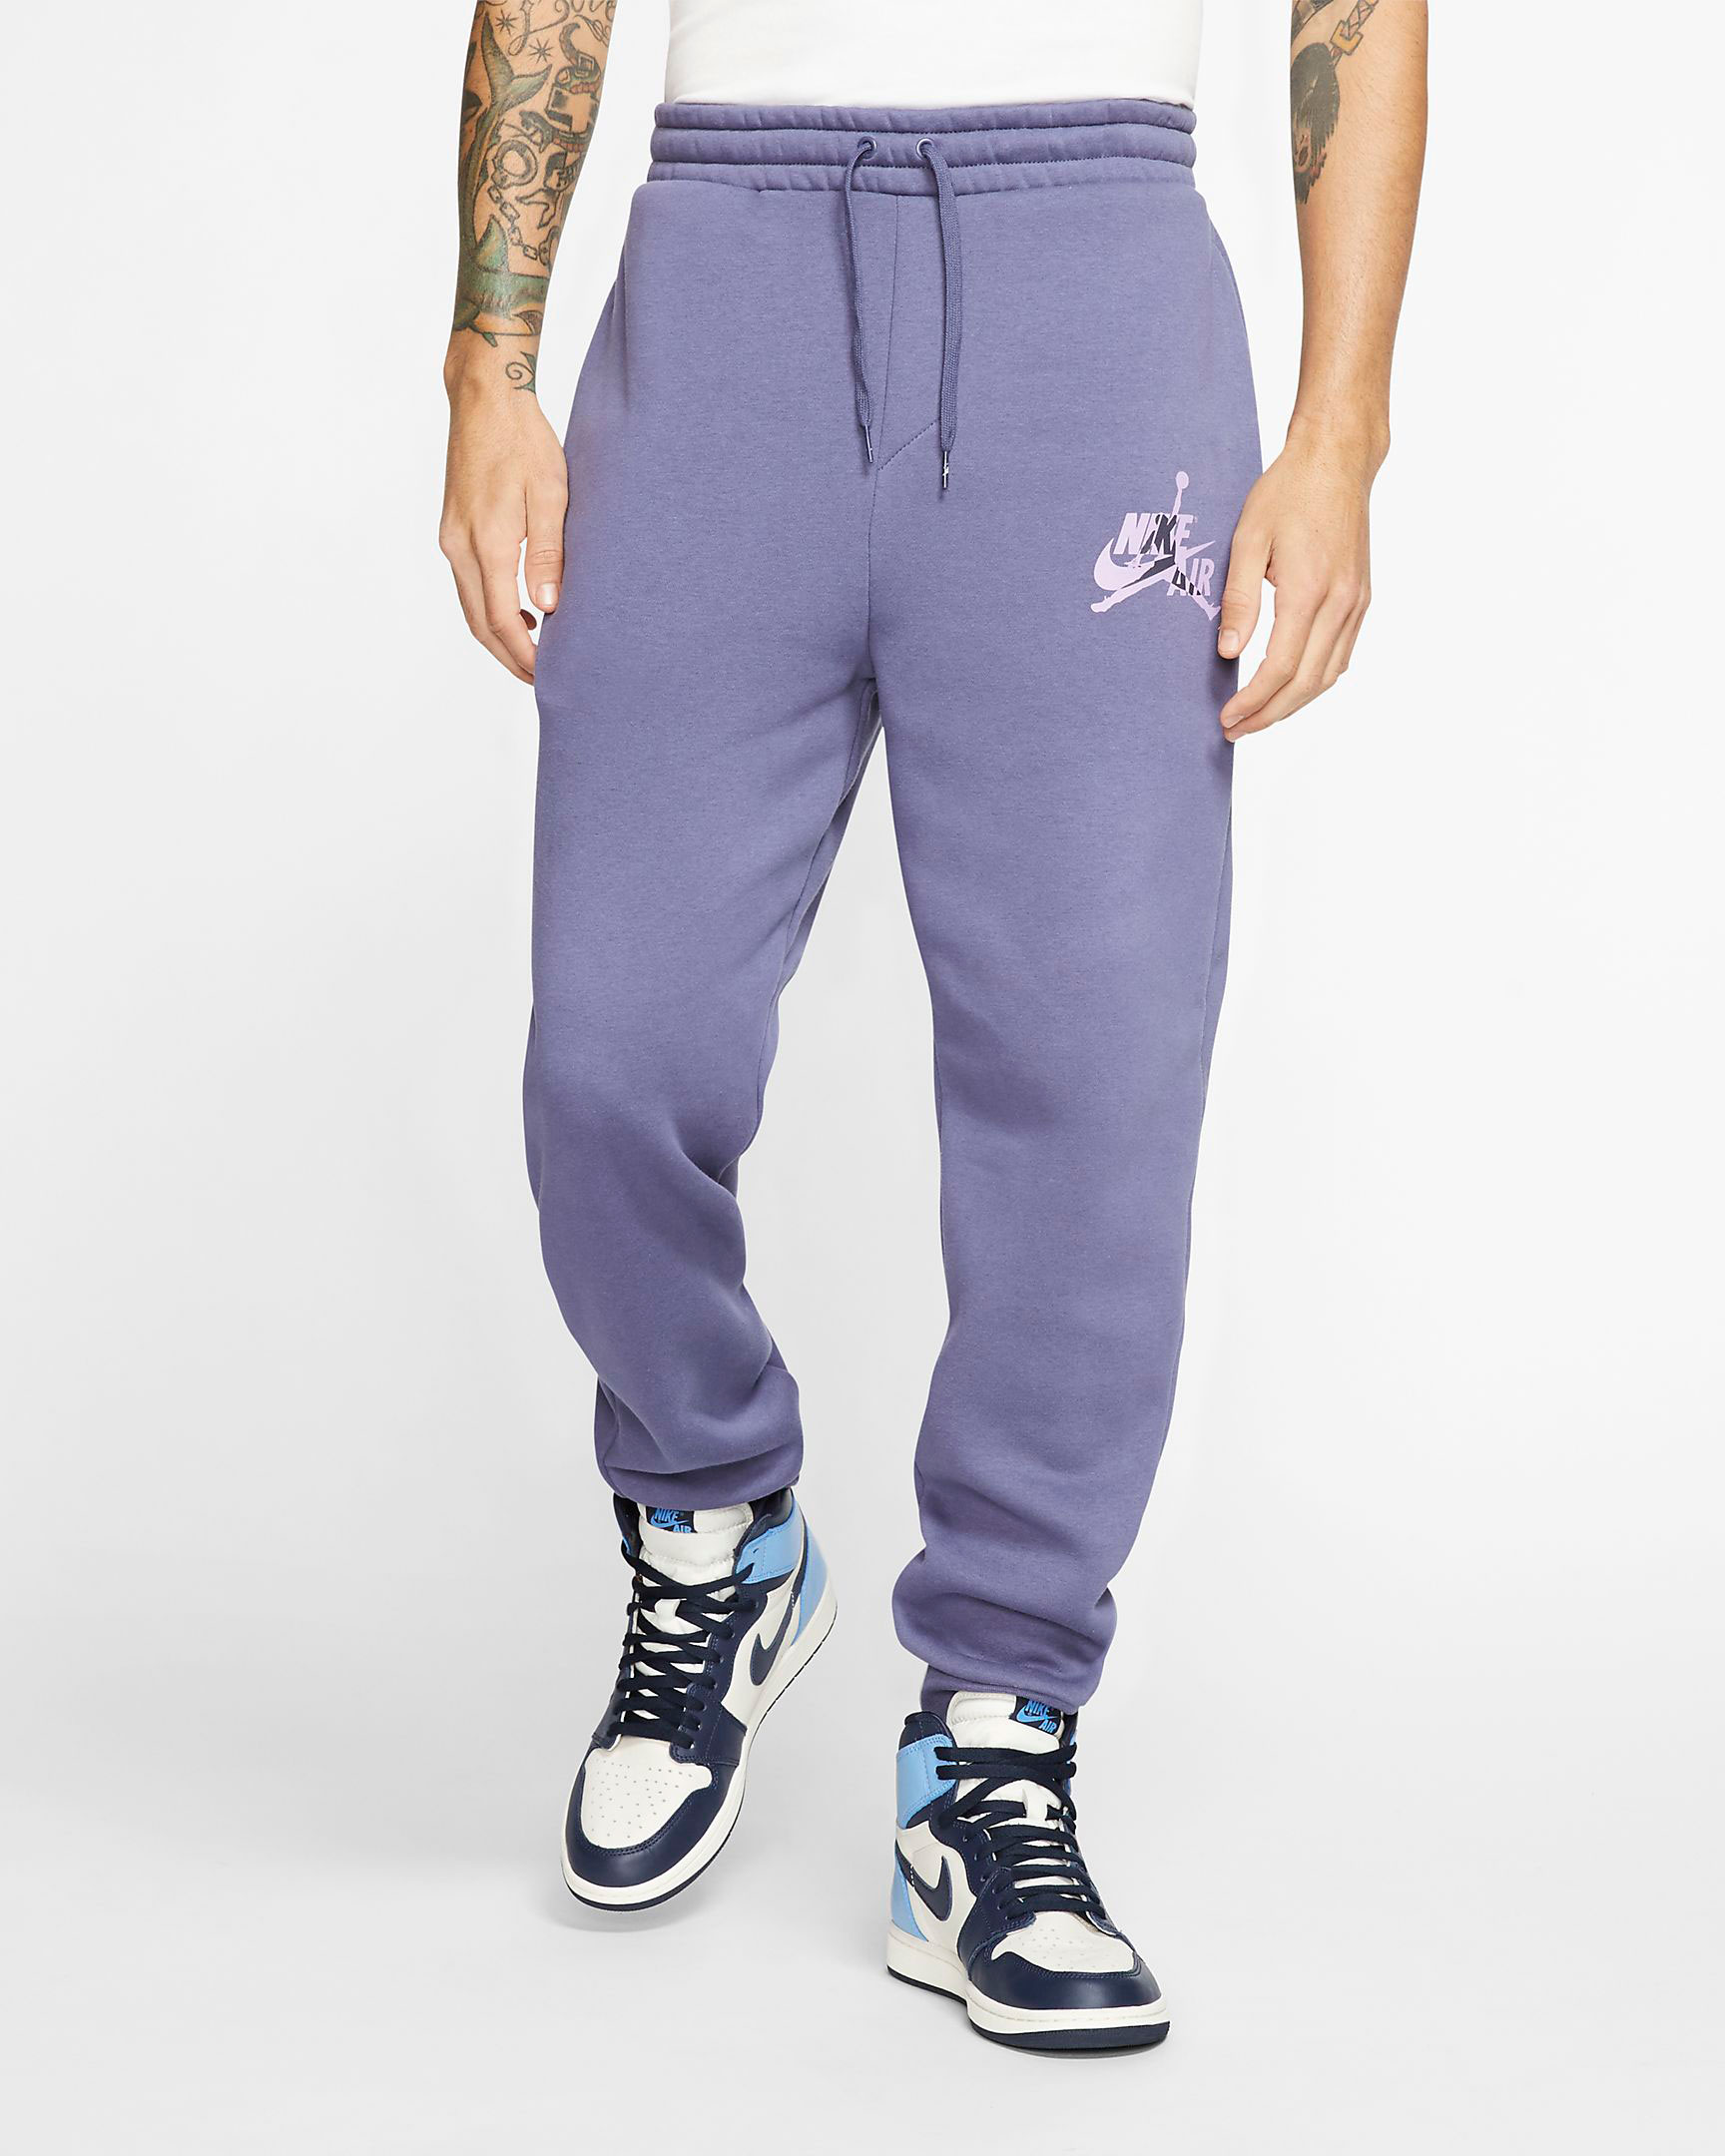 purple-metallic-jordan-4-pants-1